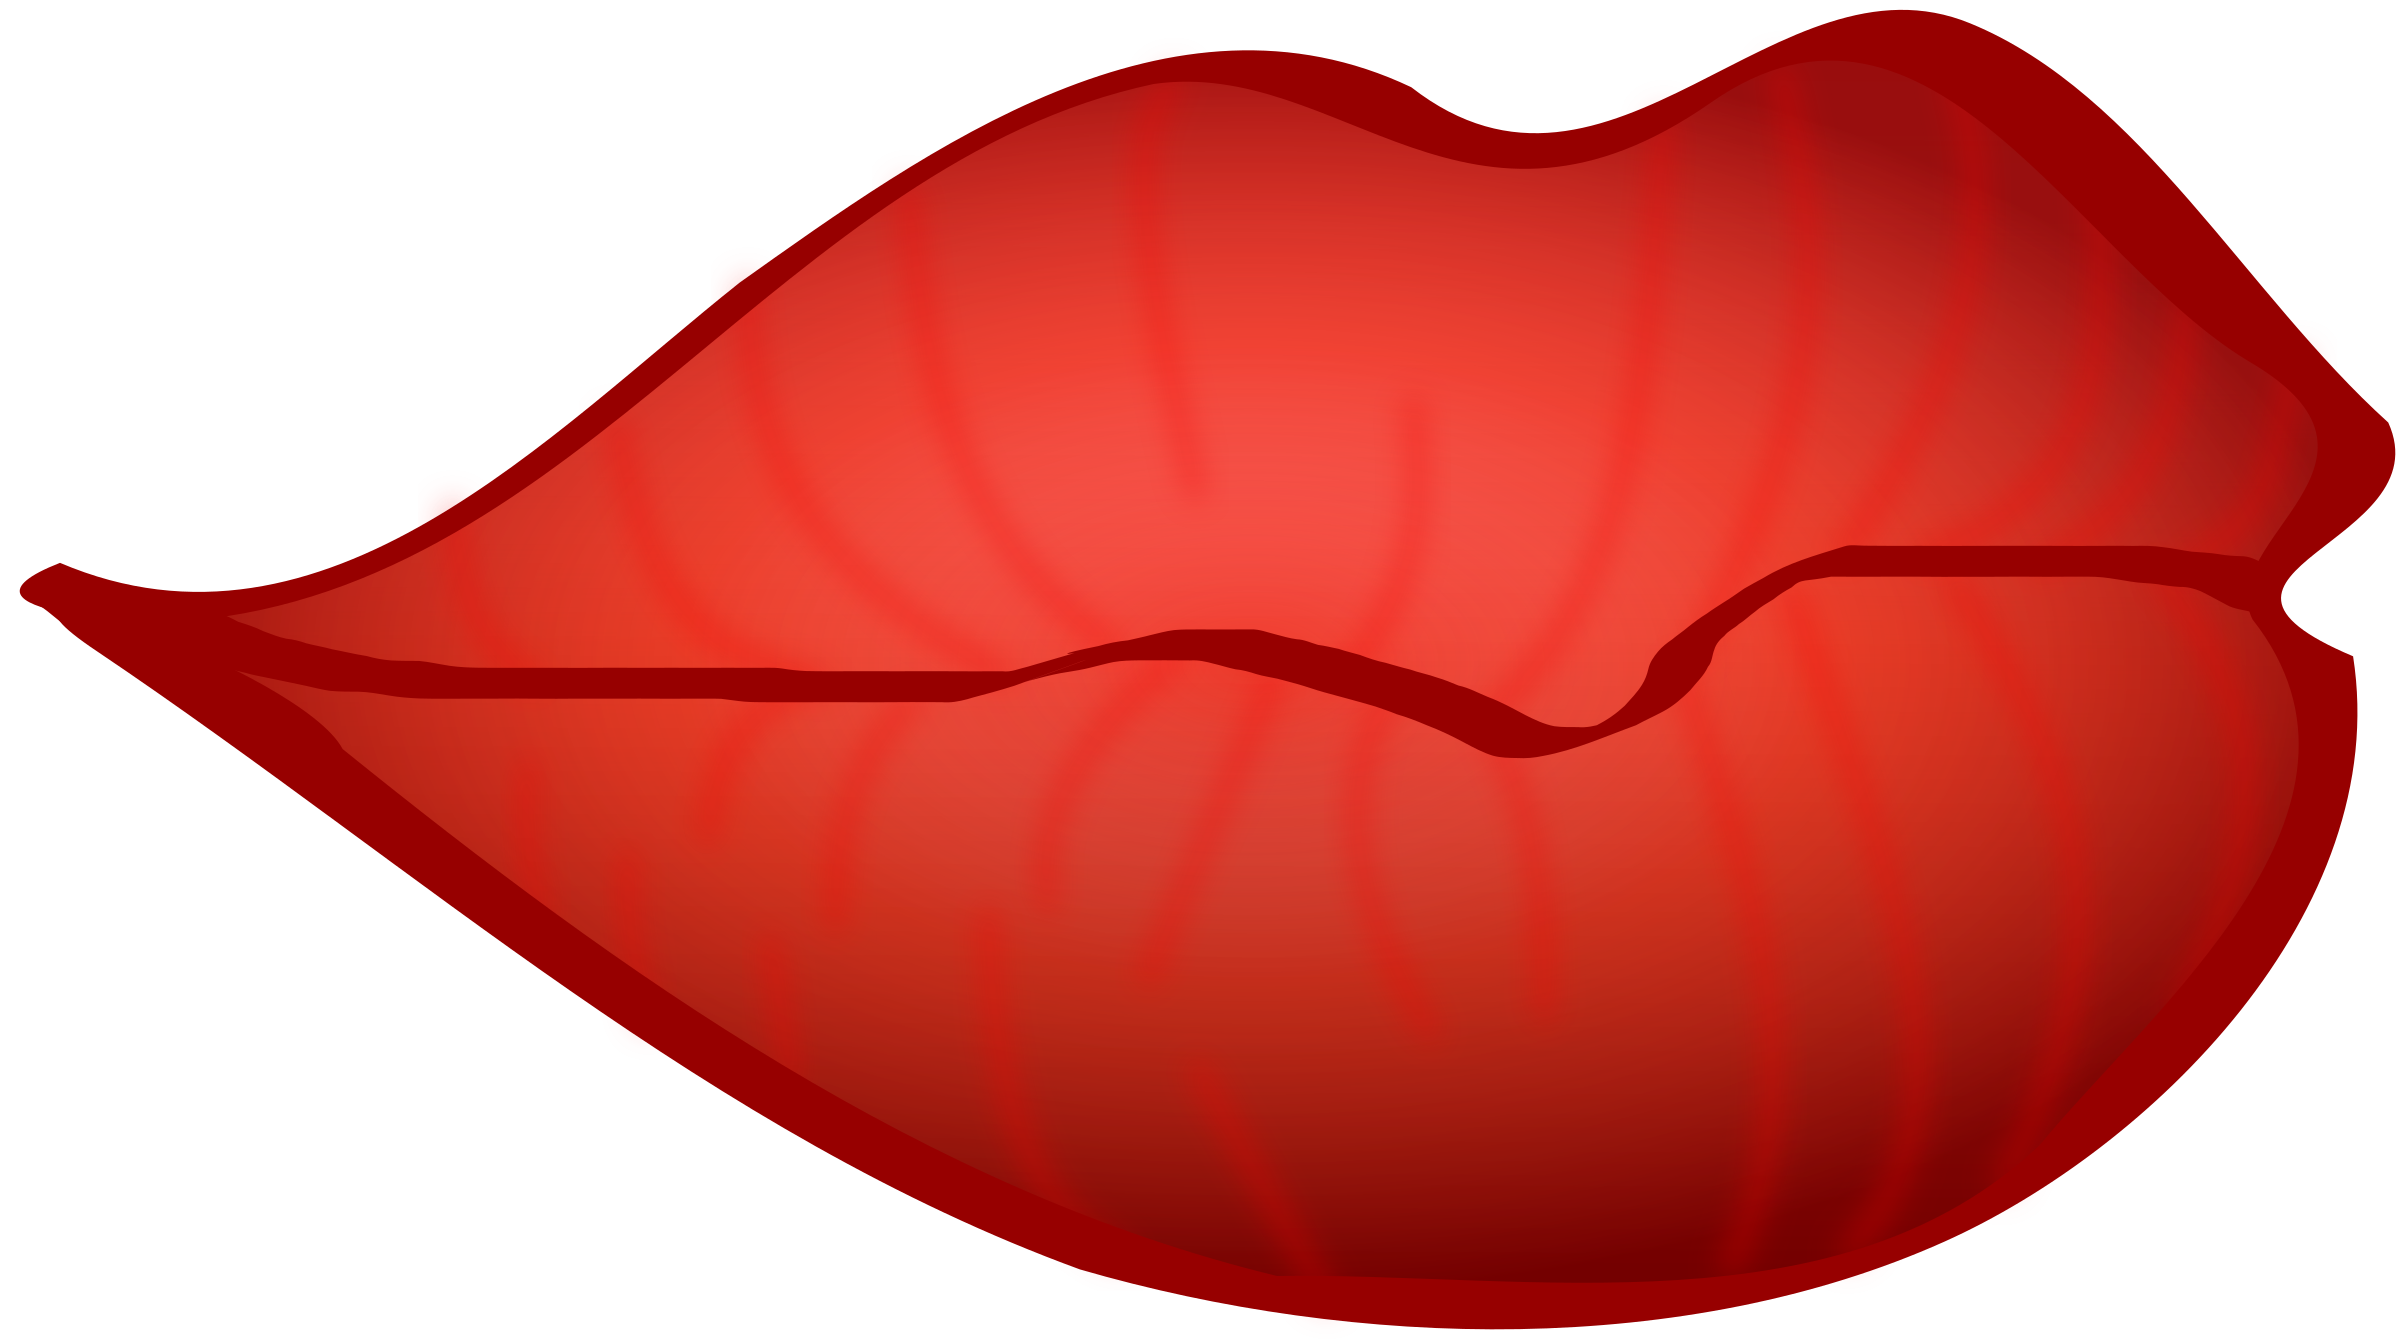 Red Lips Vector Clip Art At Clker Com Vector Clip Art Online ...